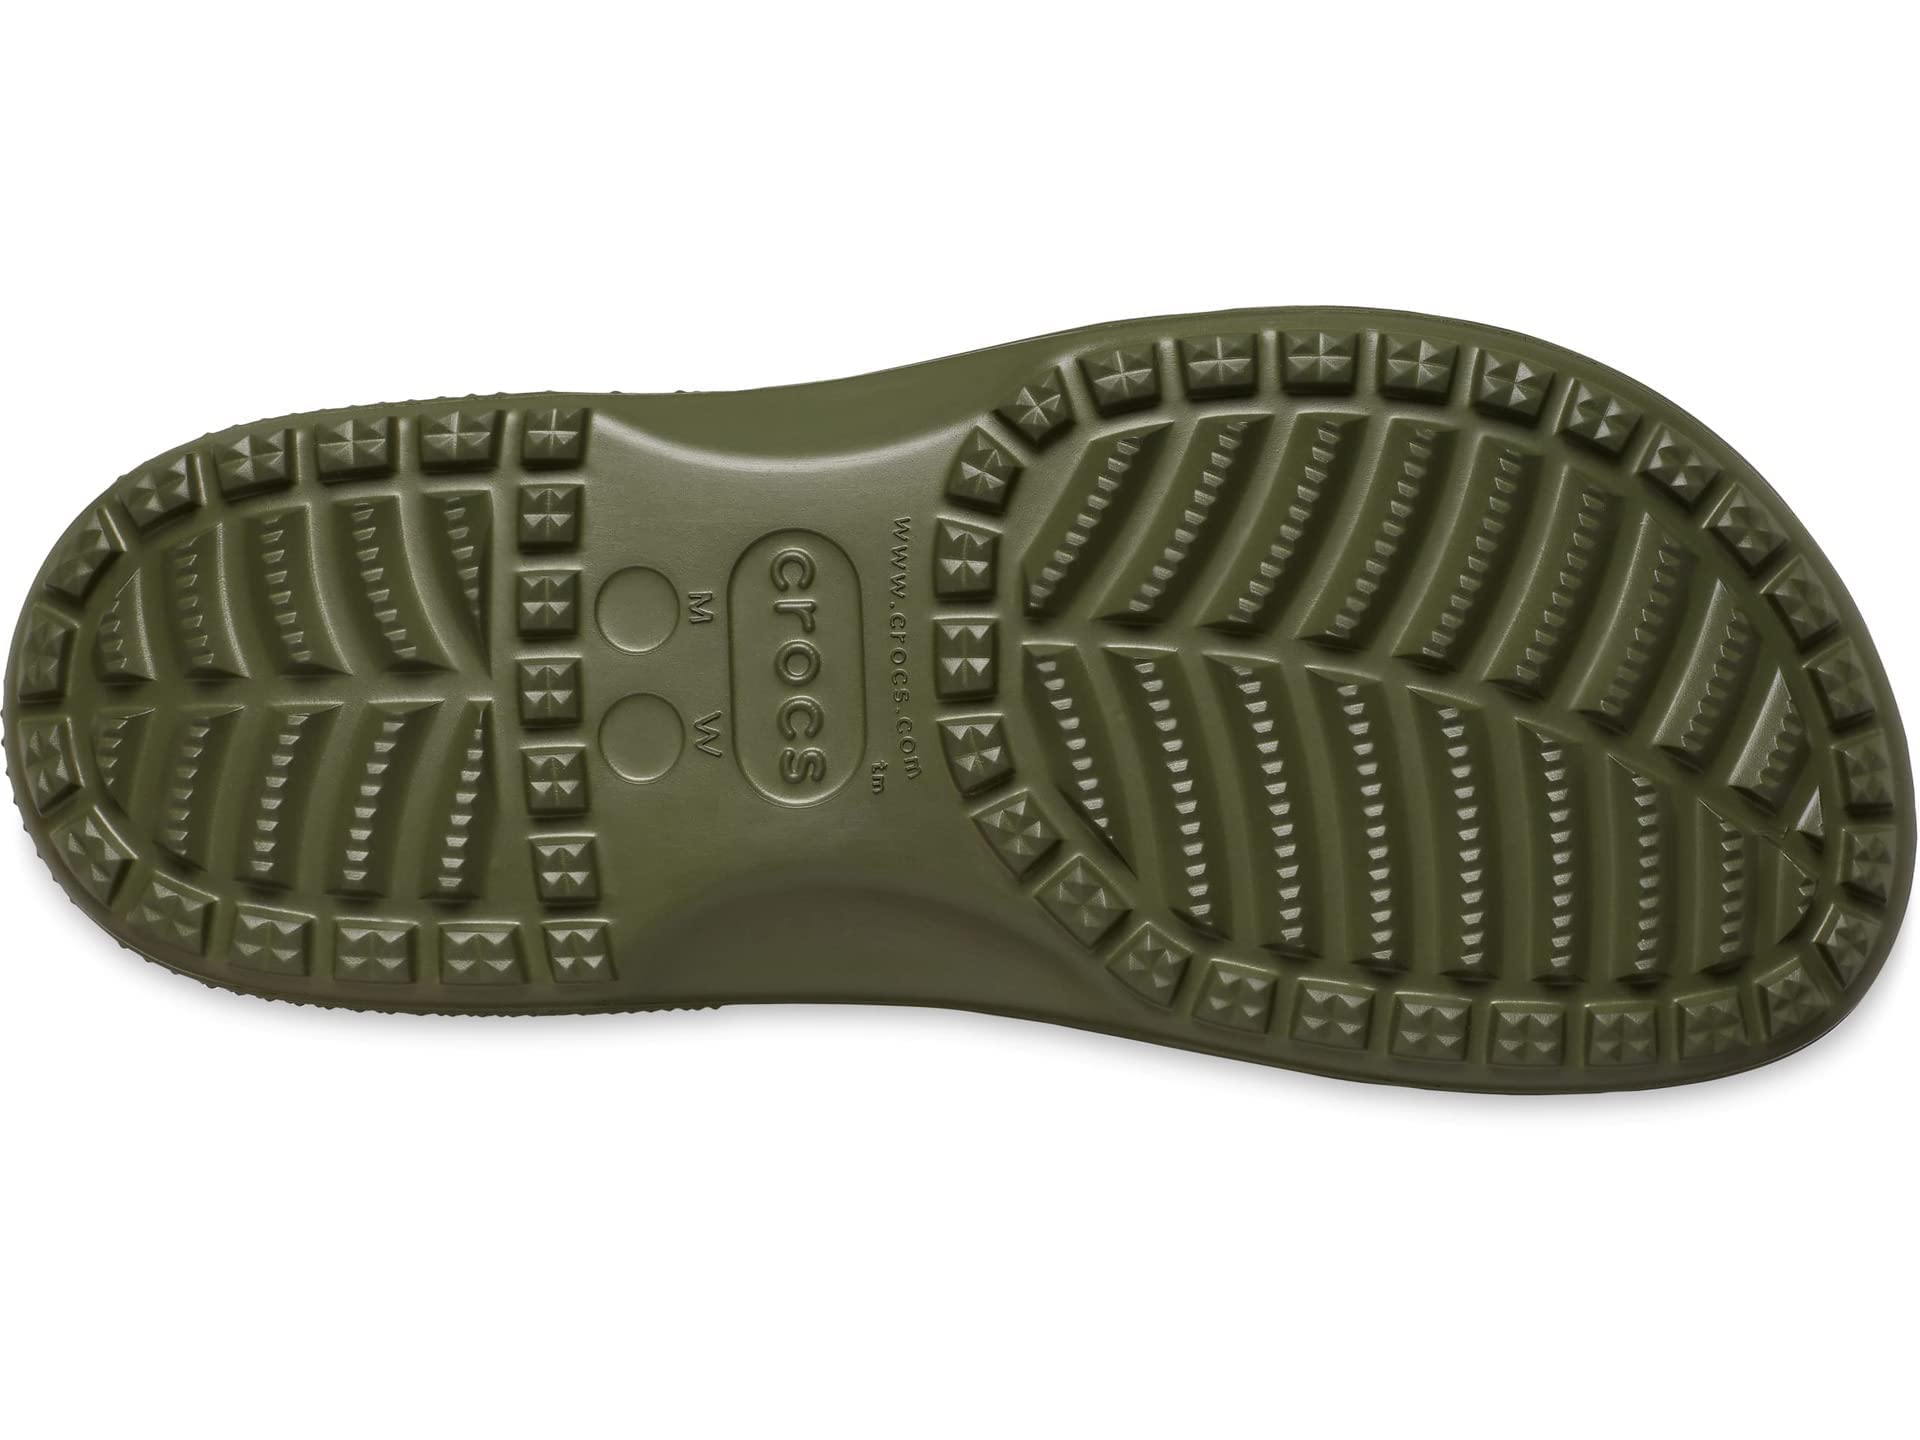 Crocs Unisex Classic Rain Boots, Army Green, 5 US Men